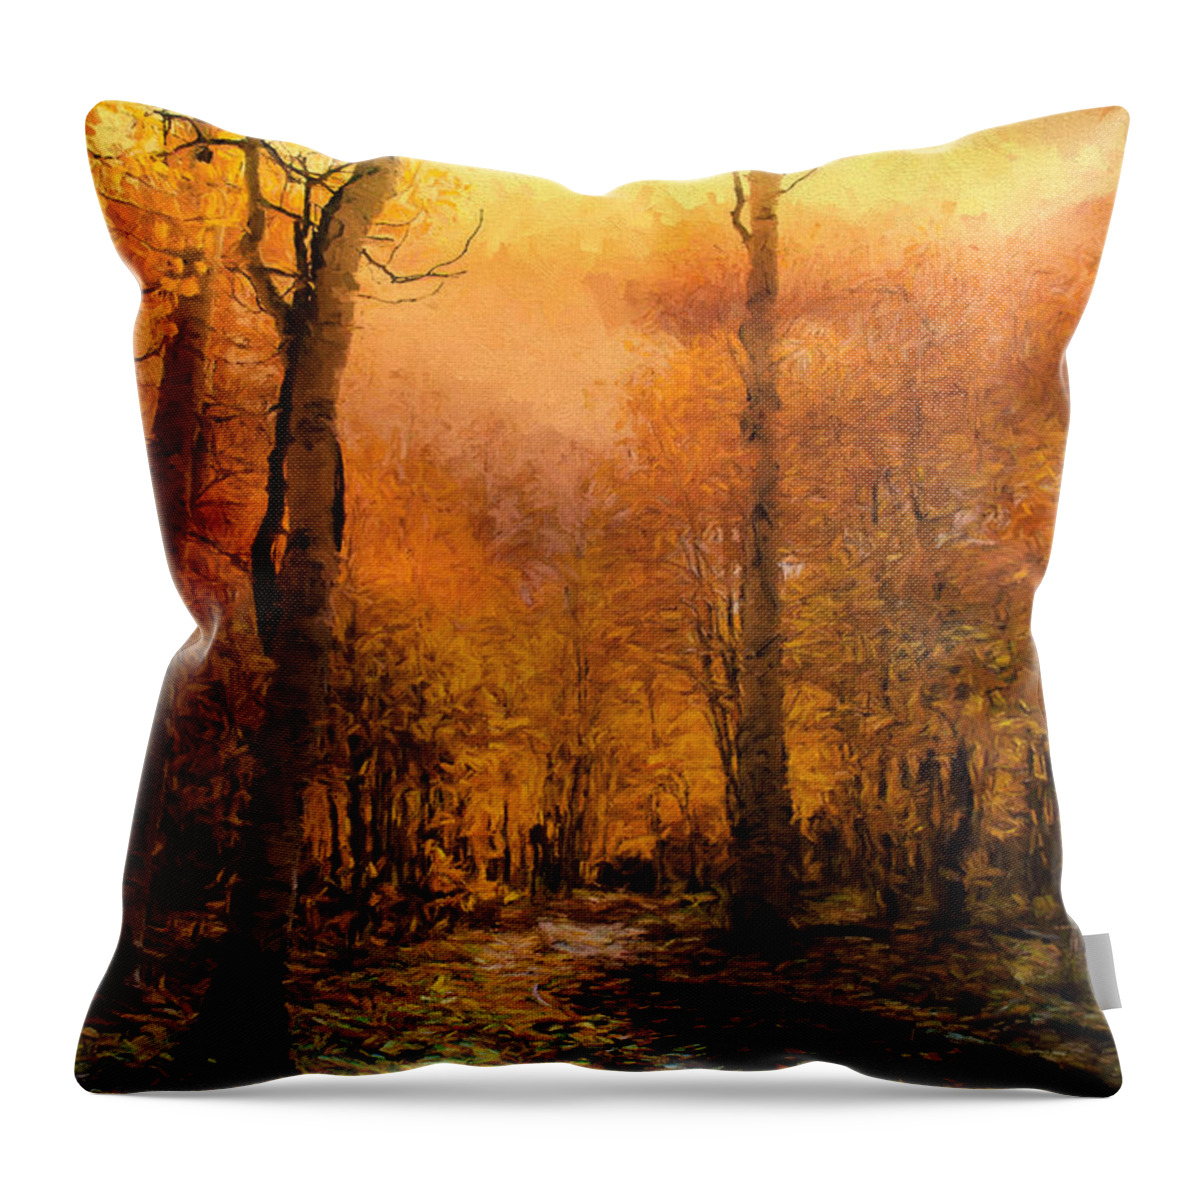 Golden Autumn Throw Pillow featuring the photograph Golden Autumn by Georgiana Romanovna